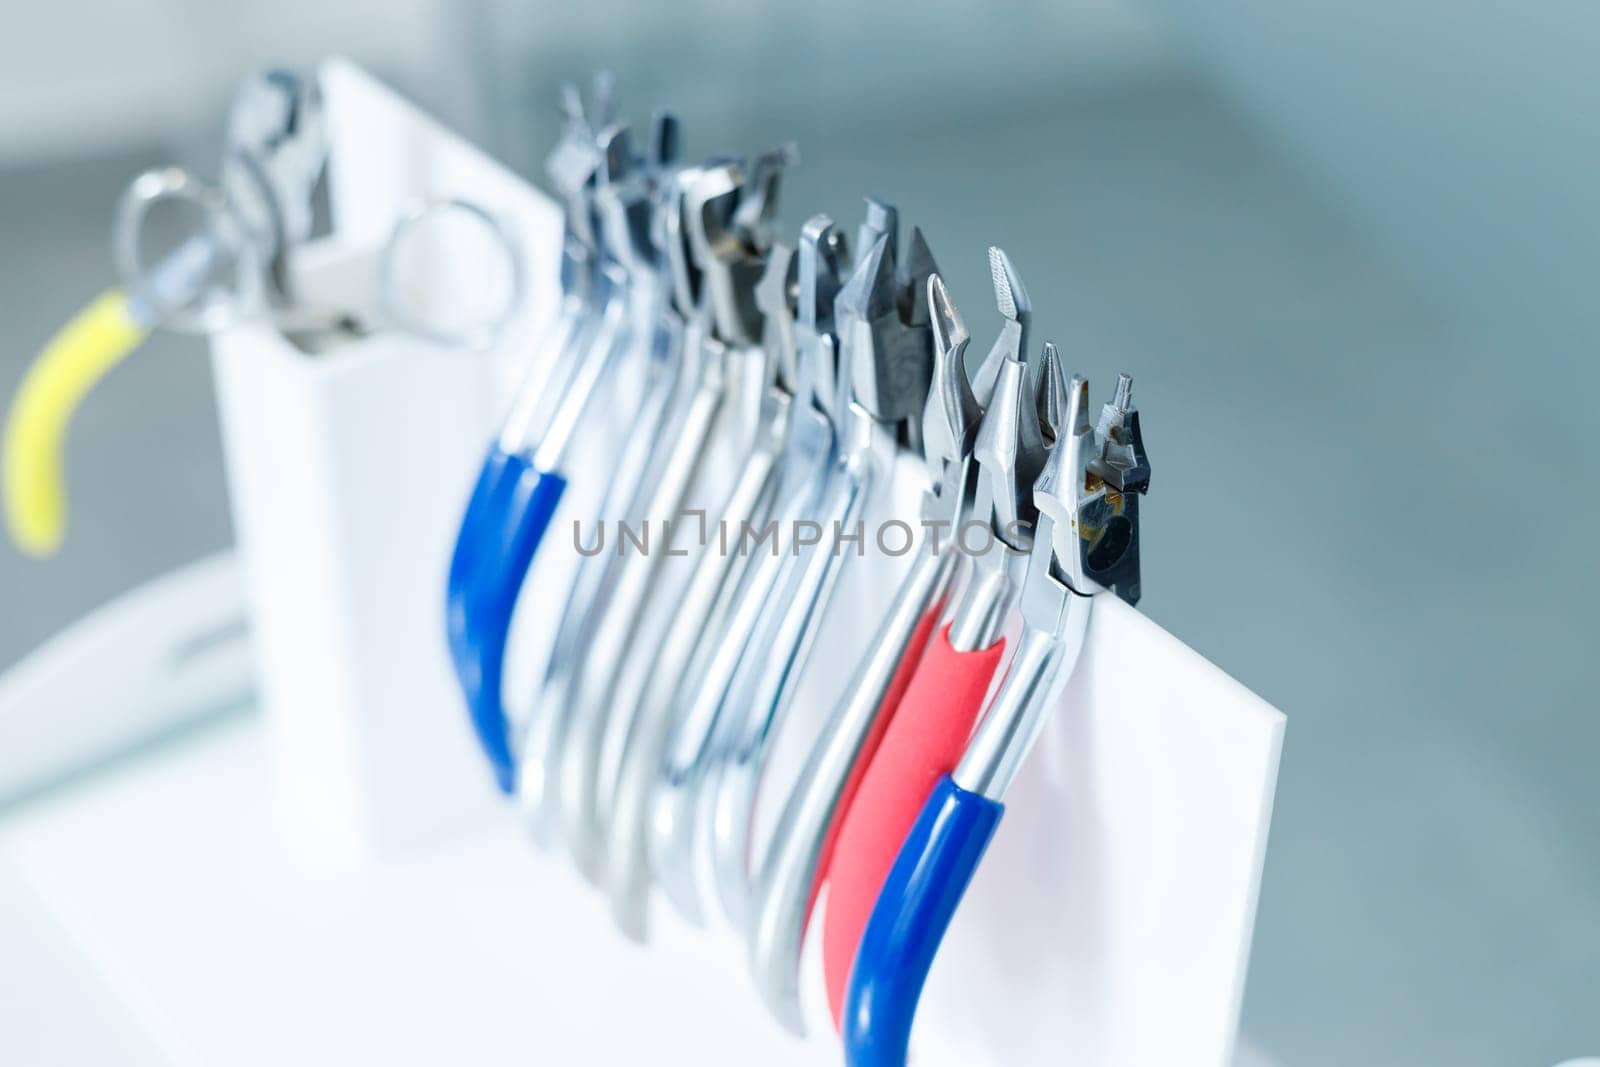 Orthodontic metal forceps for dental treatment. Orthodontic instruments